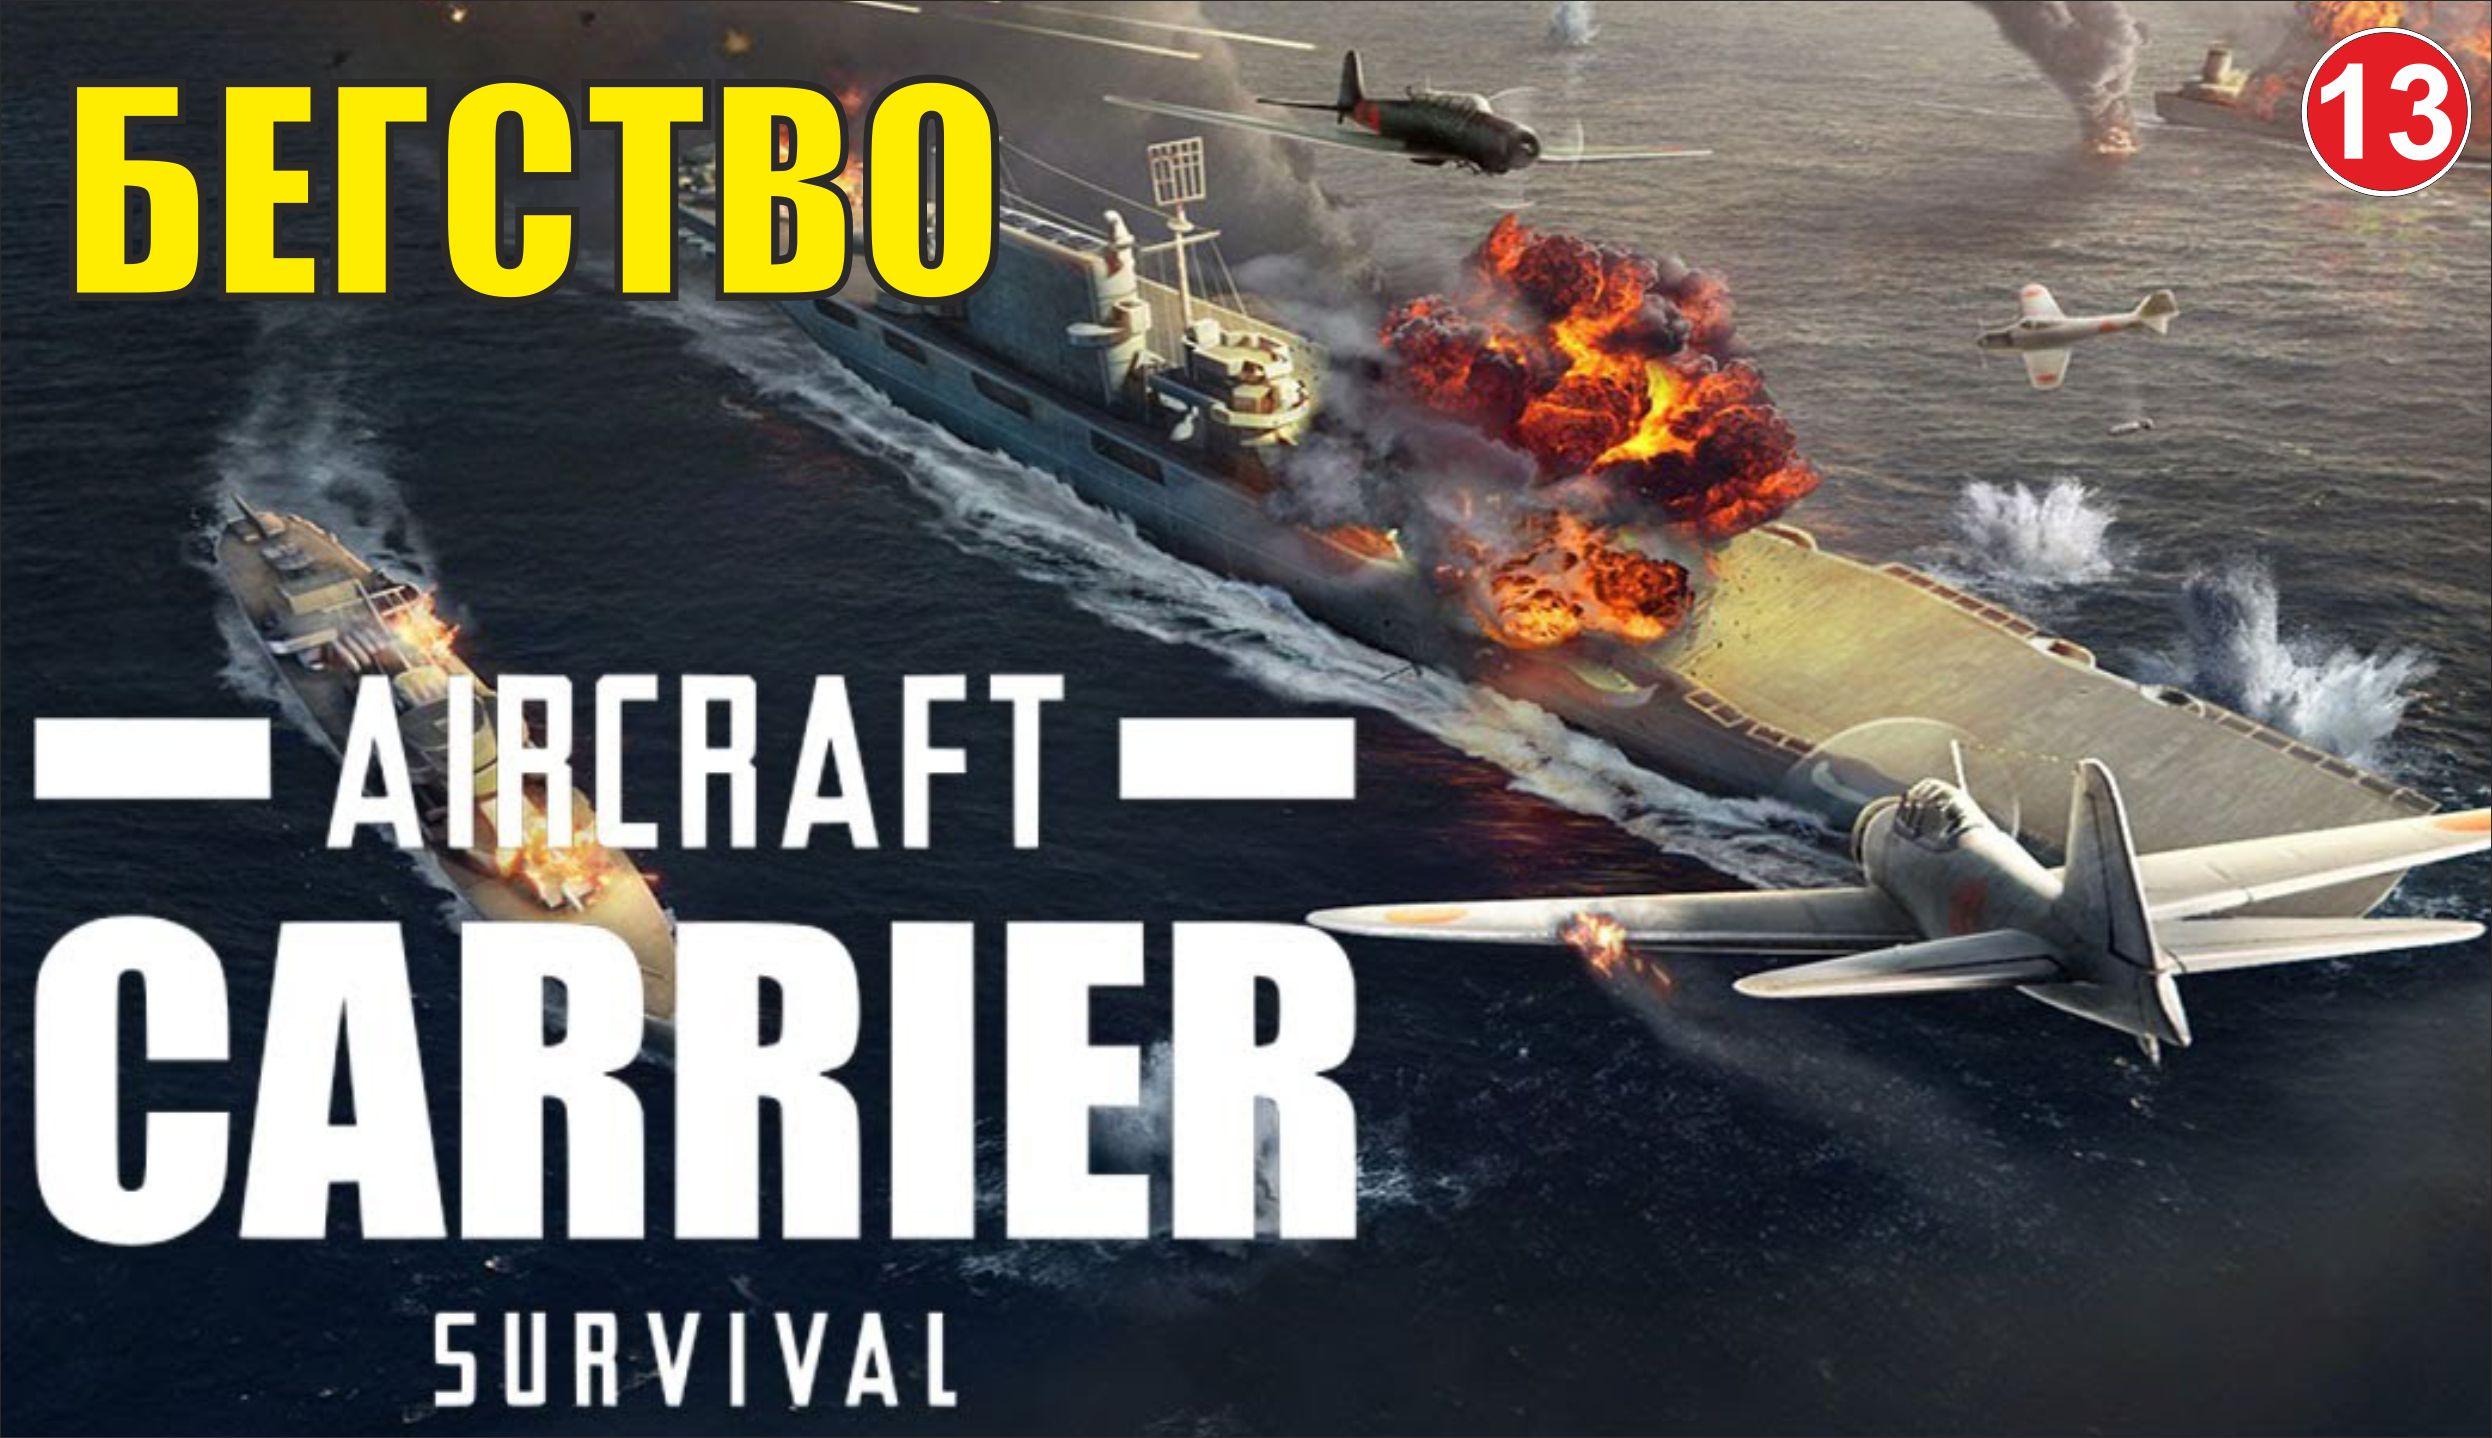 Aircraft Carrier Survival - Бегство